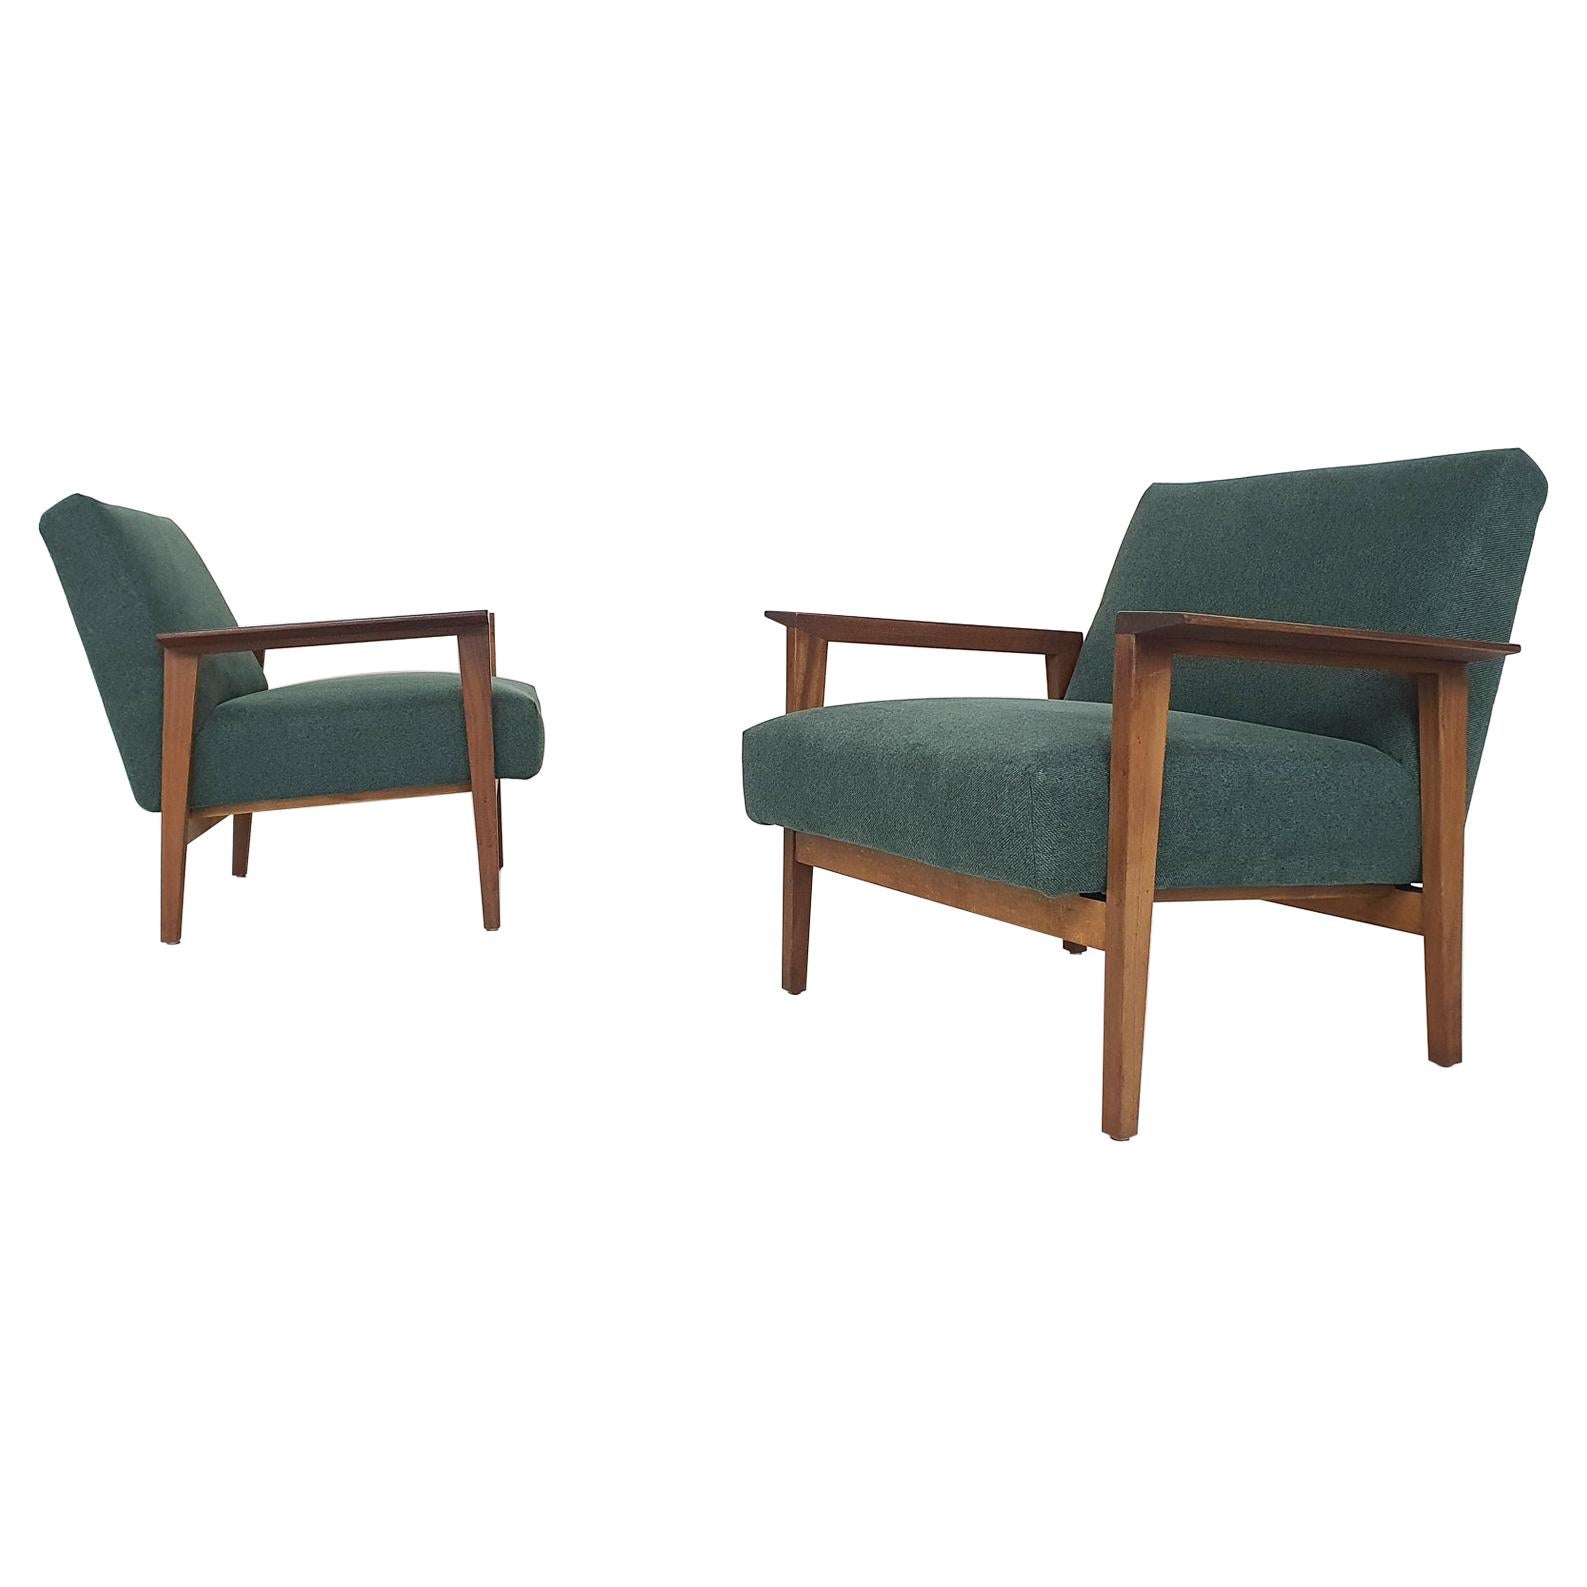 Scandinavian Modern Teak Arm Chairs with New Green Upholstery, 1960's